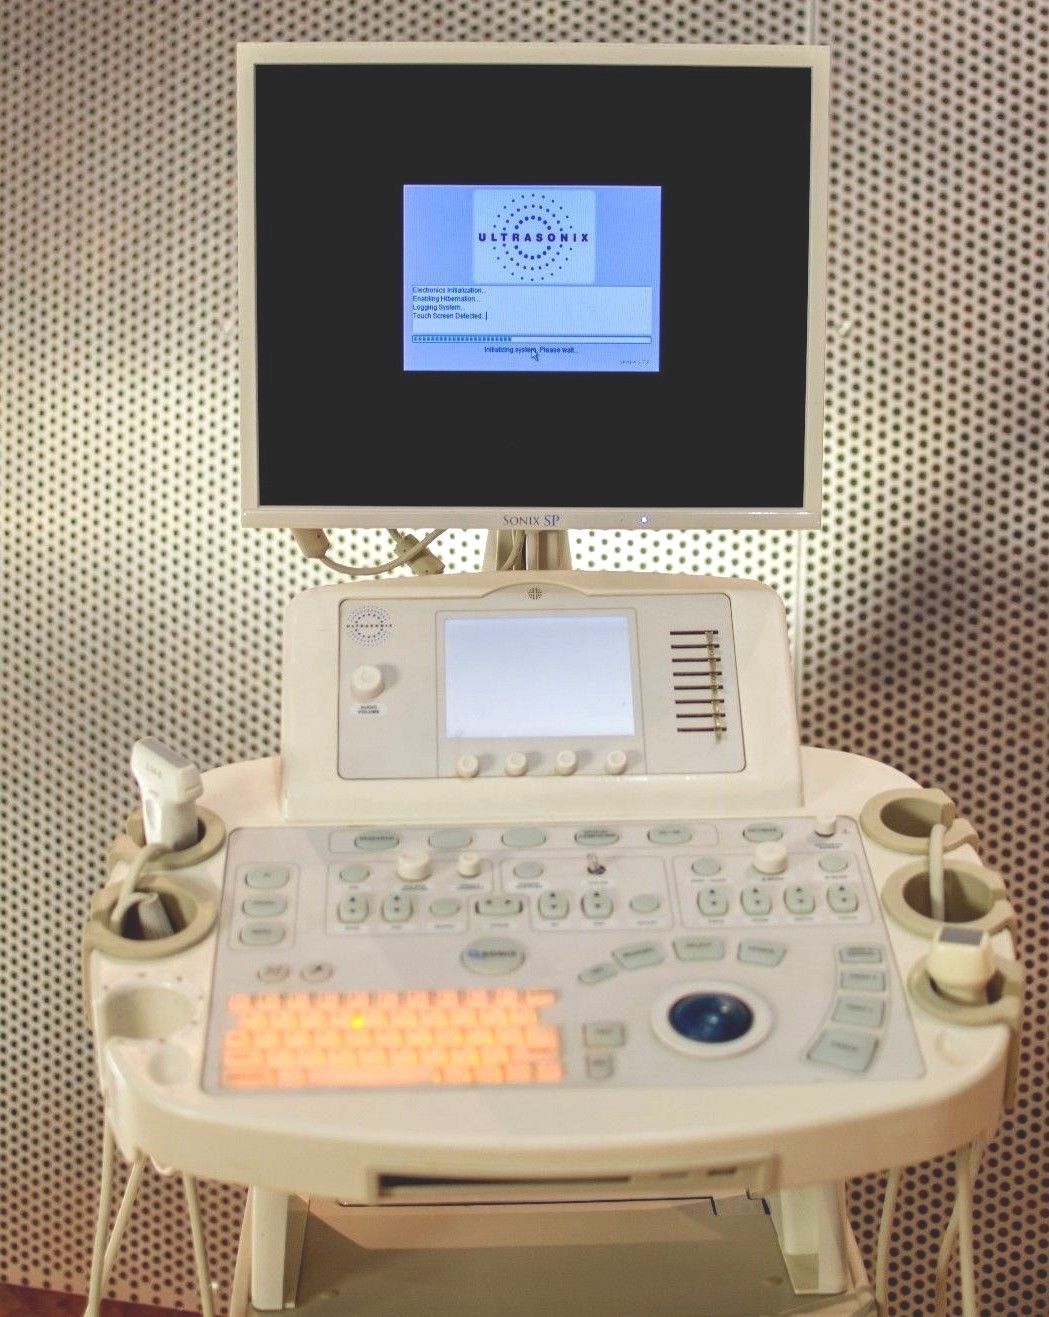 Ultrasonix Sonix SP Ultrasound System w/ Probes PA4-2 / 20 & L14-5 / 38 DIAGNOSTIC ULTRASOUND MACHINES FOR SALE